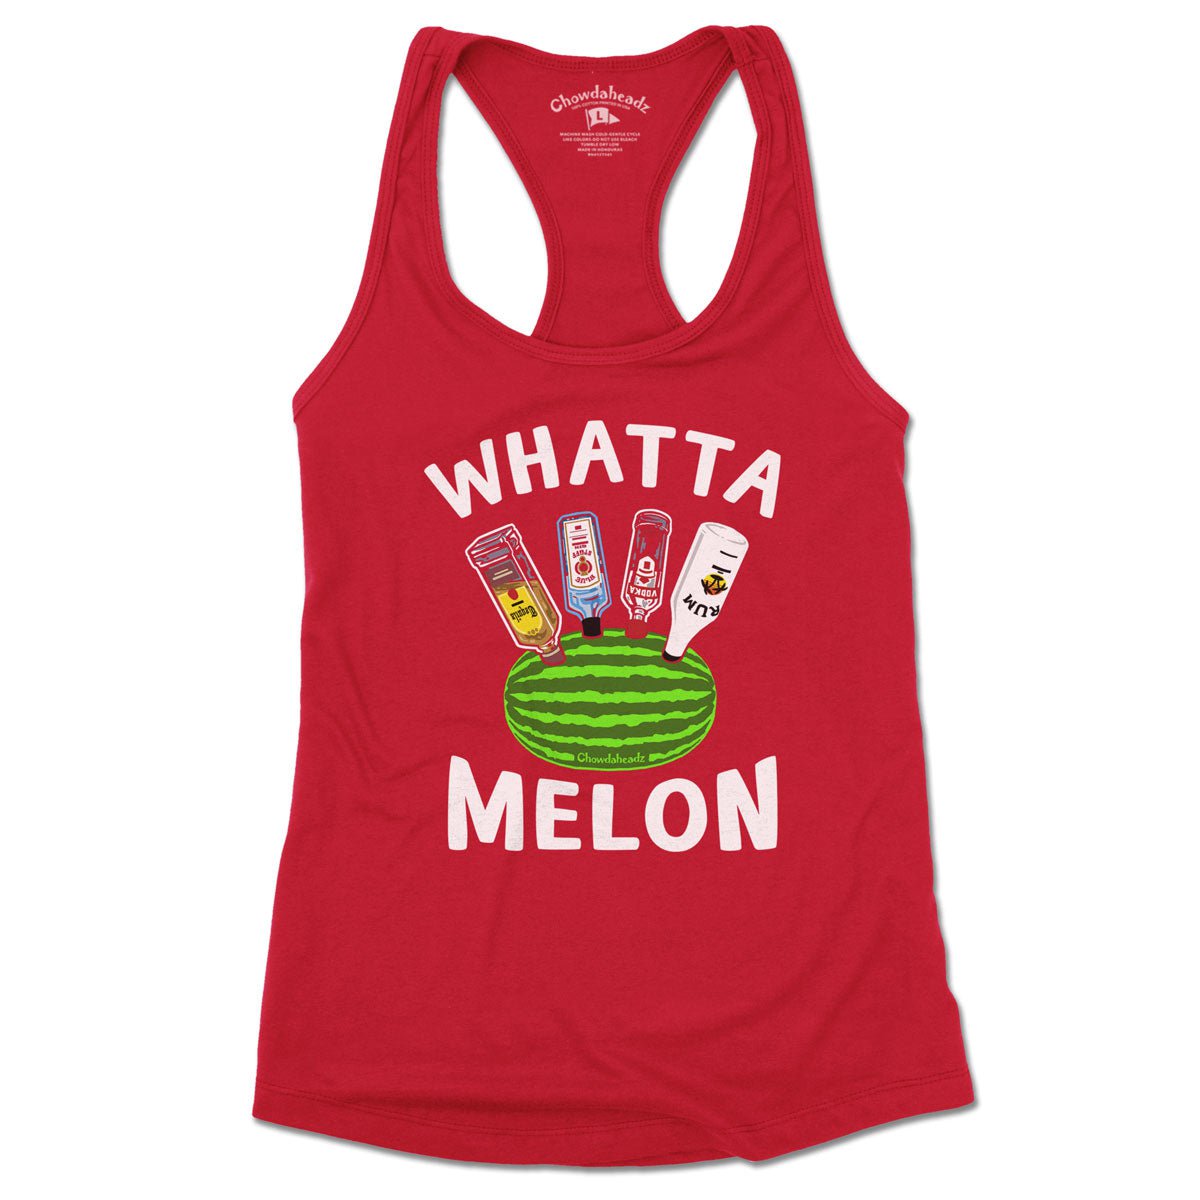 Whatta Melon Women's Tank Top (4 Colors) - Chowdaheadz